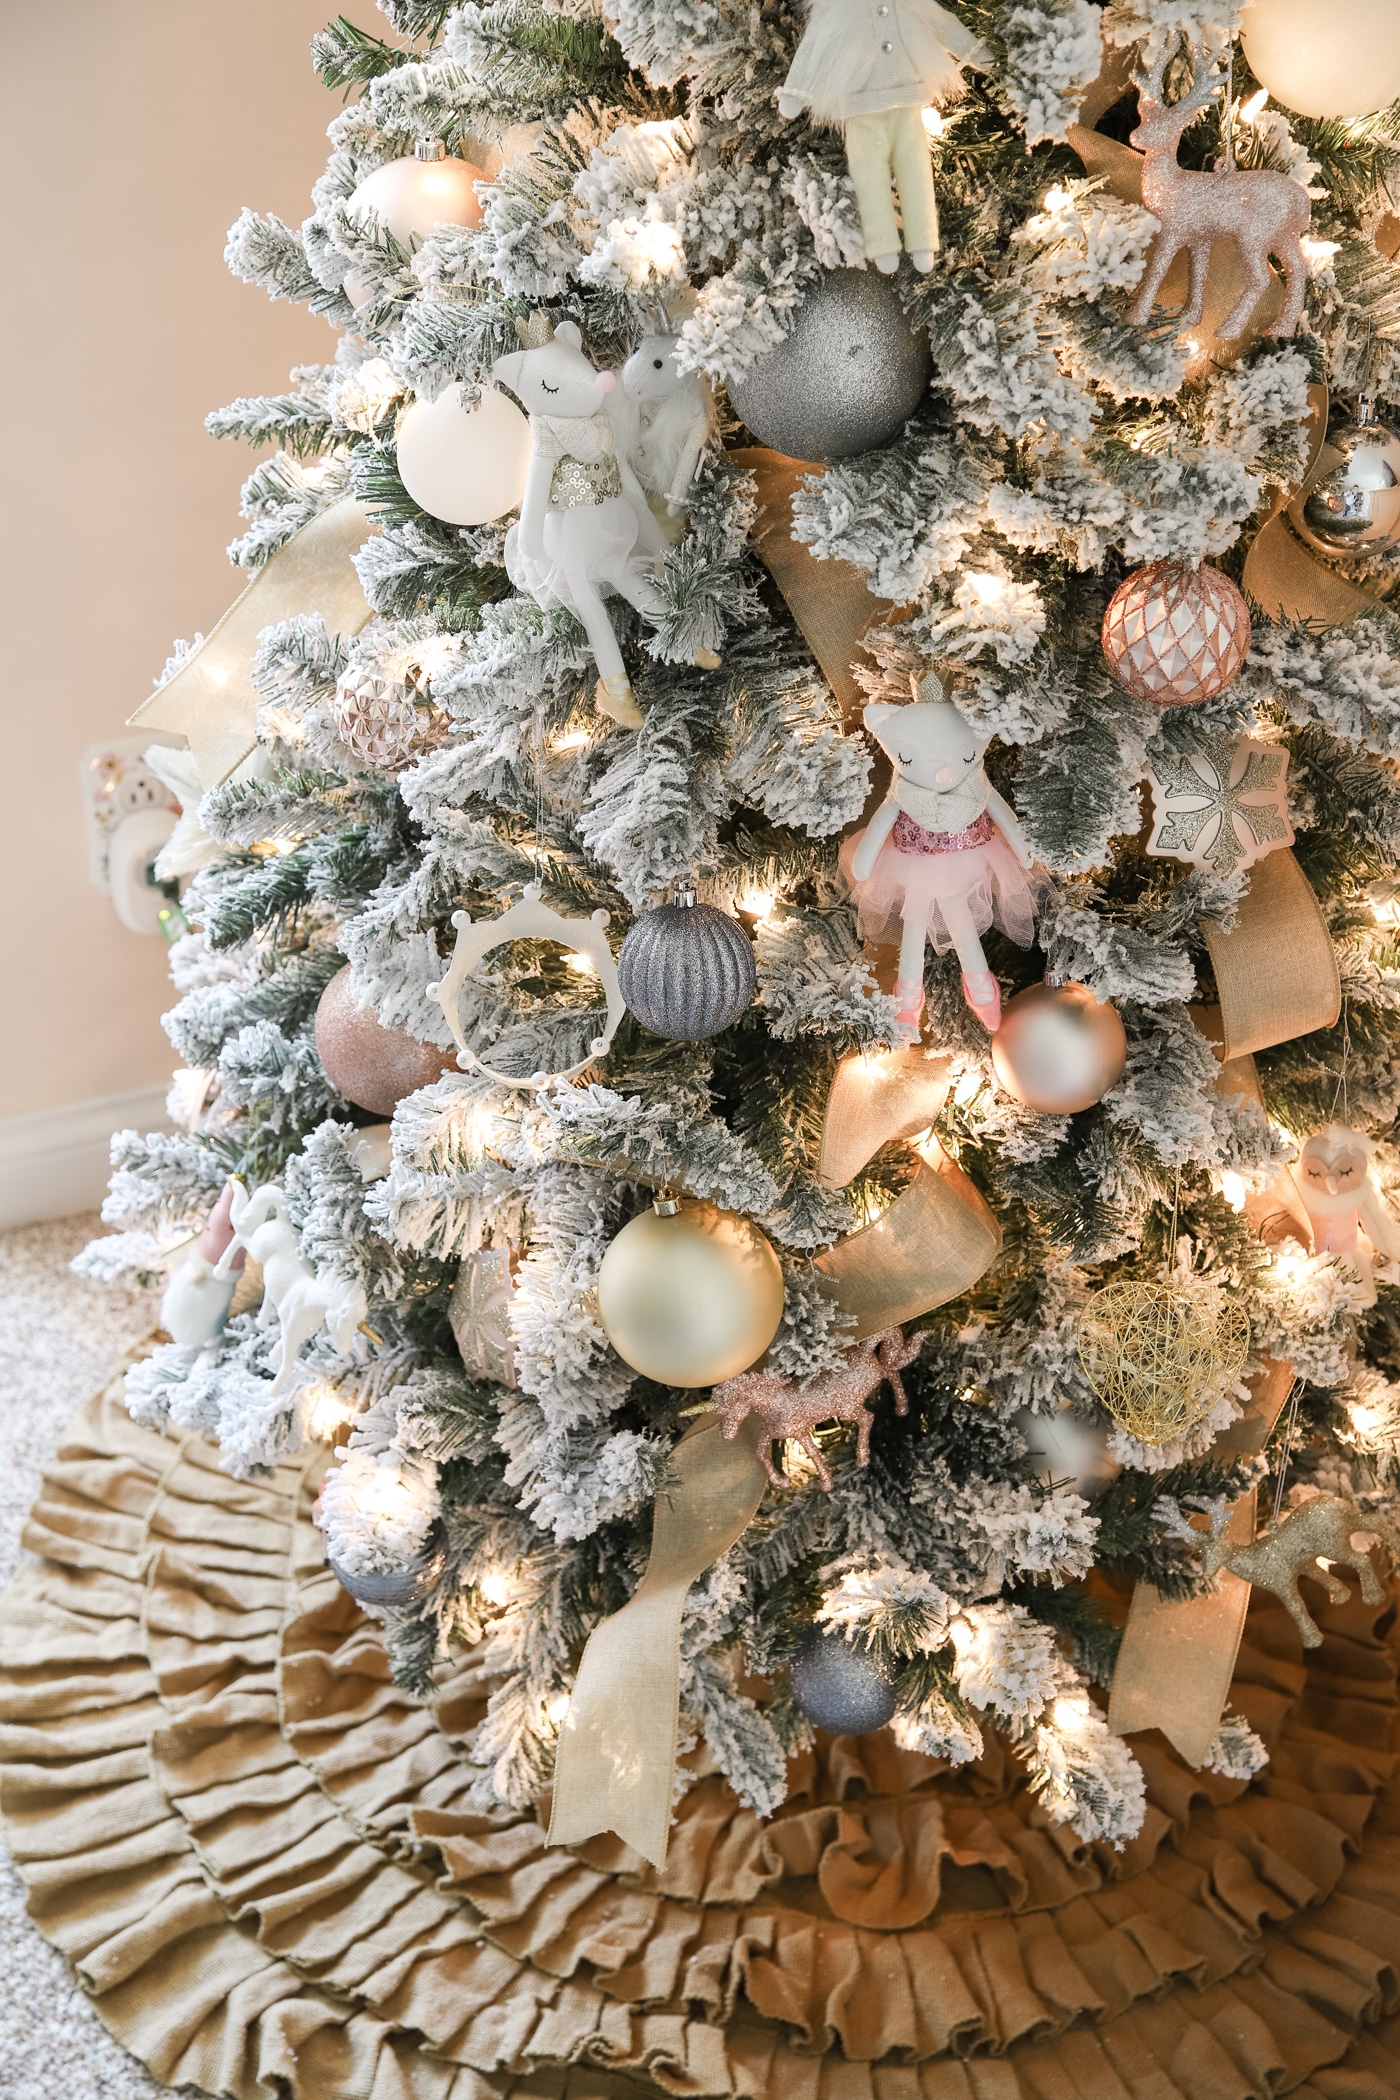 Girls' Bedroom Christmas Tree Decor